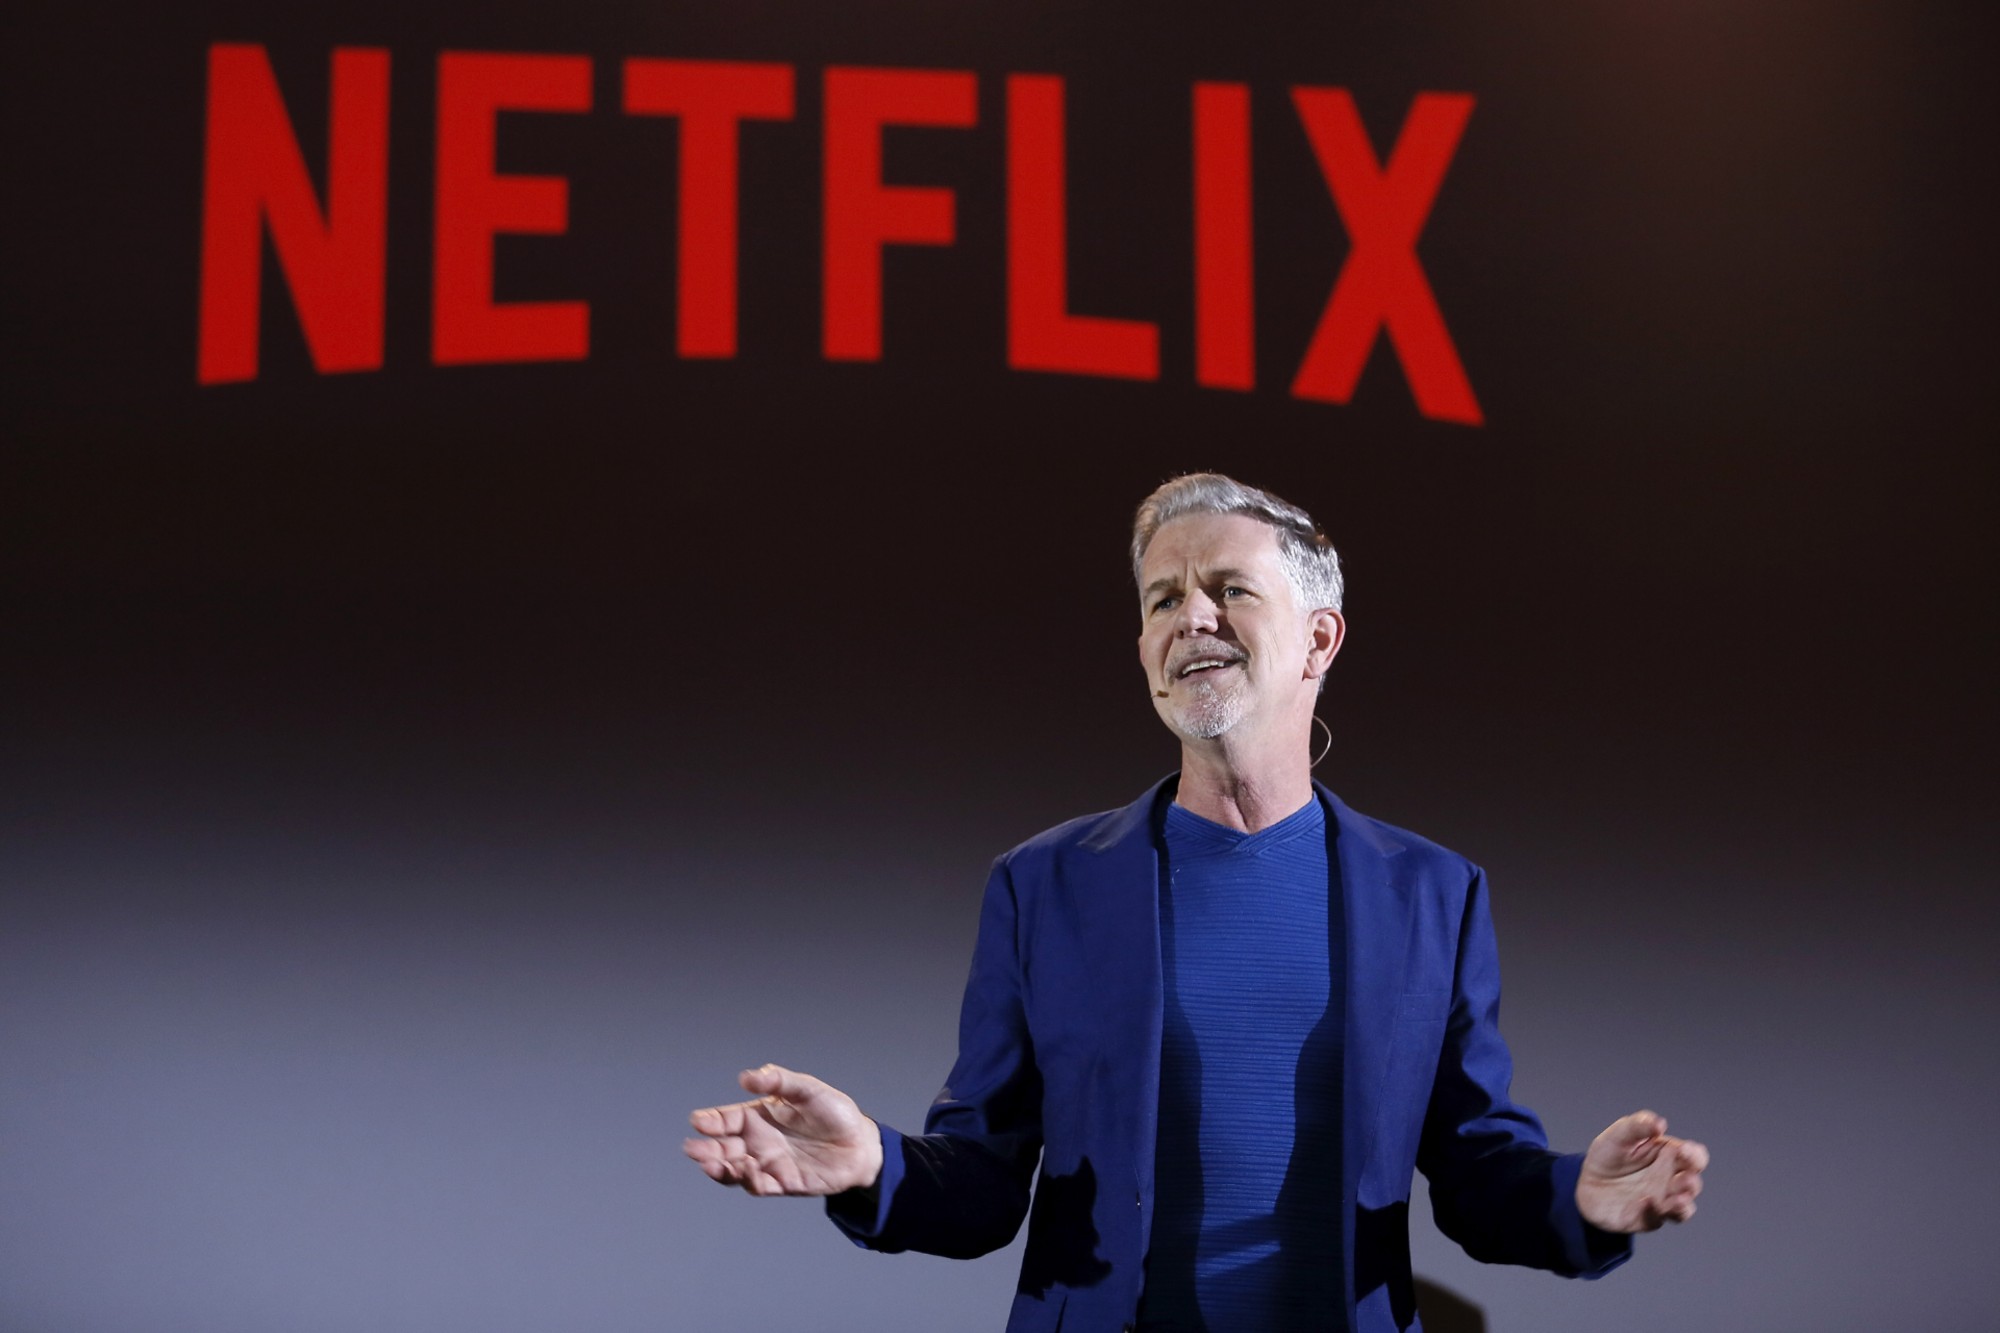 Sistema Netflix: Google permite anúncios de golpe que cresce na web